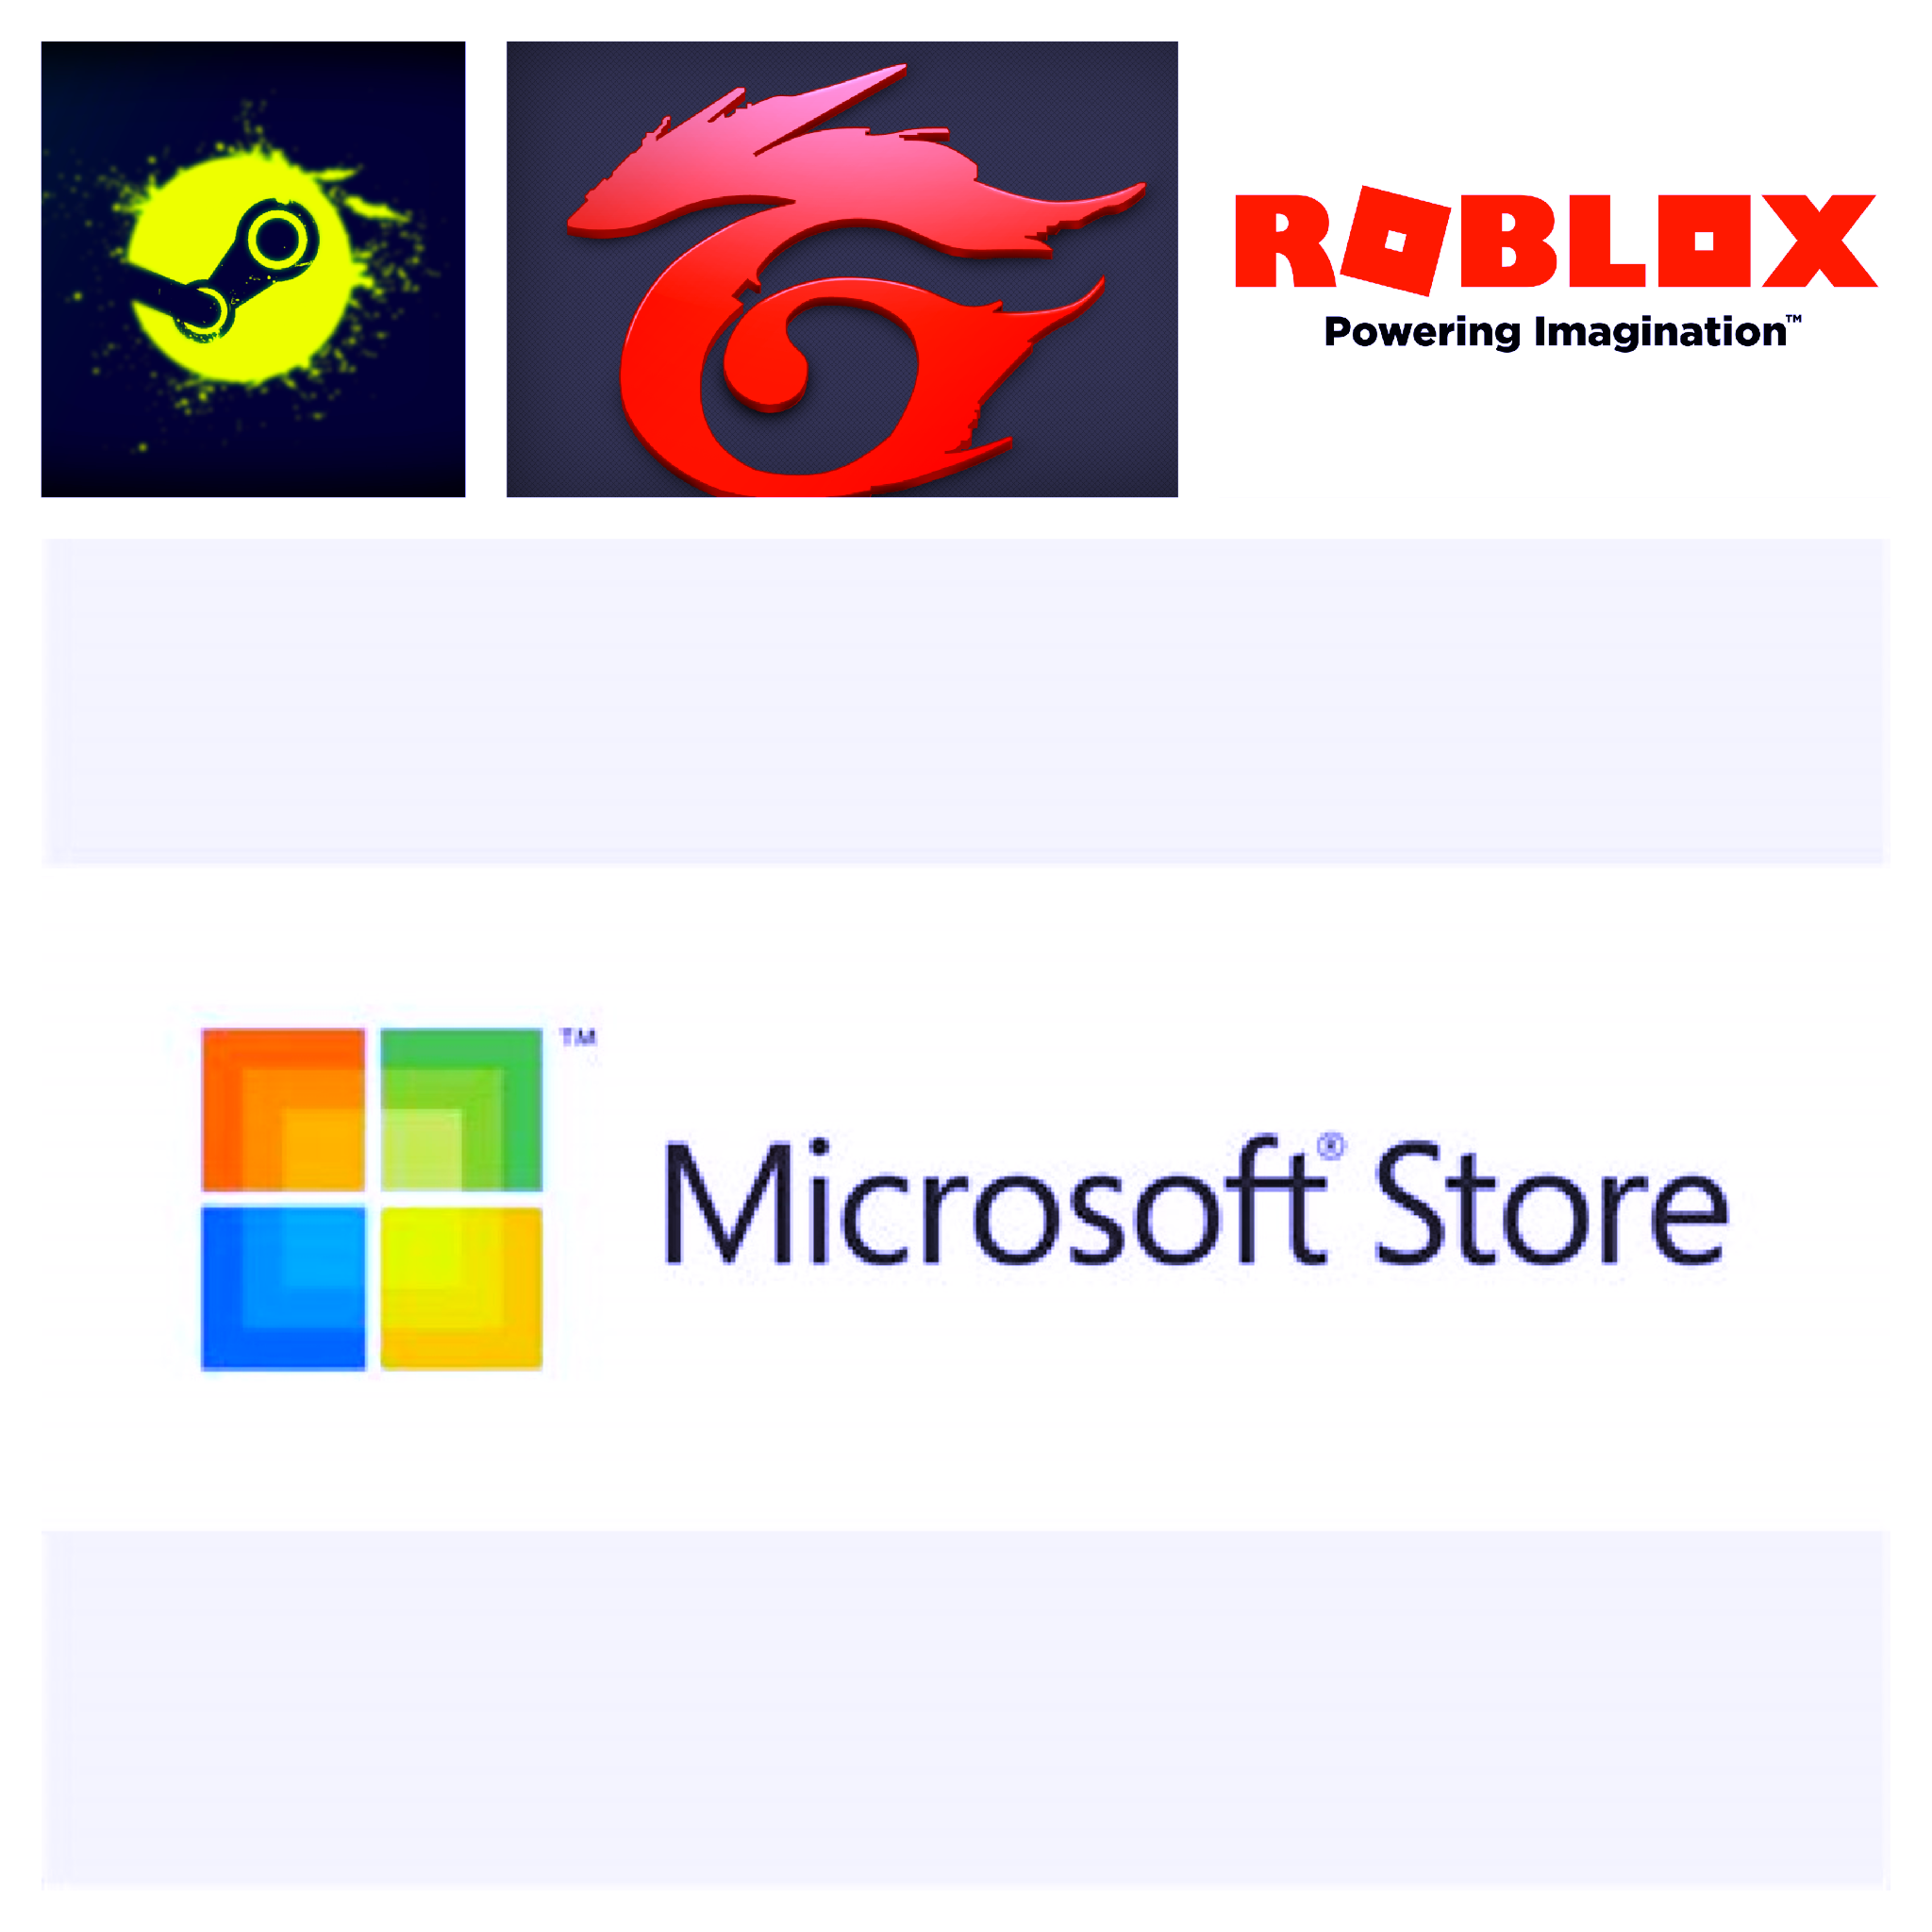 Steam Garena Roblox Microsoft Store Freetoedit - roblox powering imagination logo